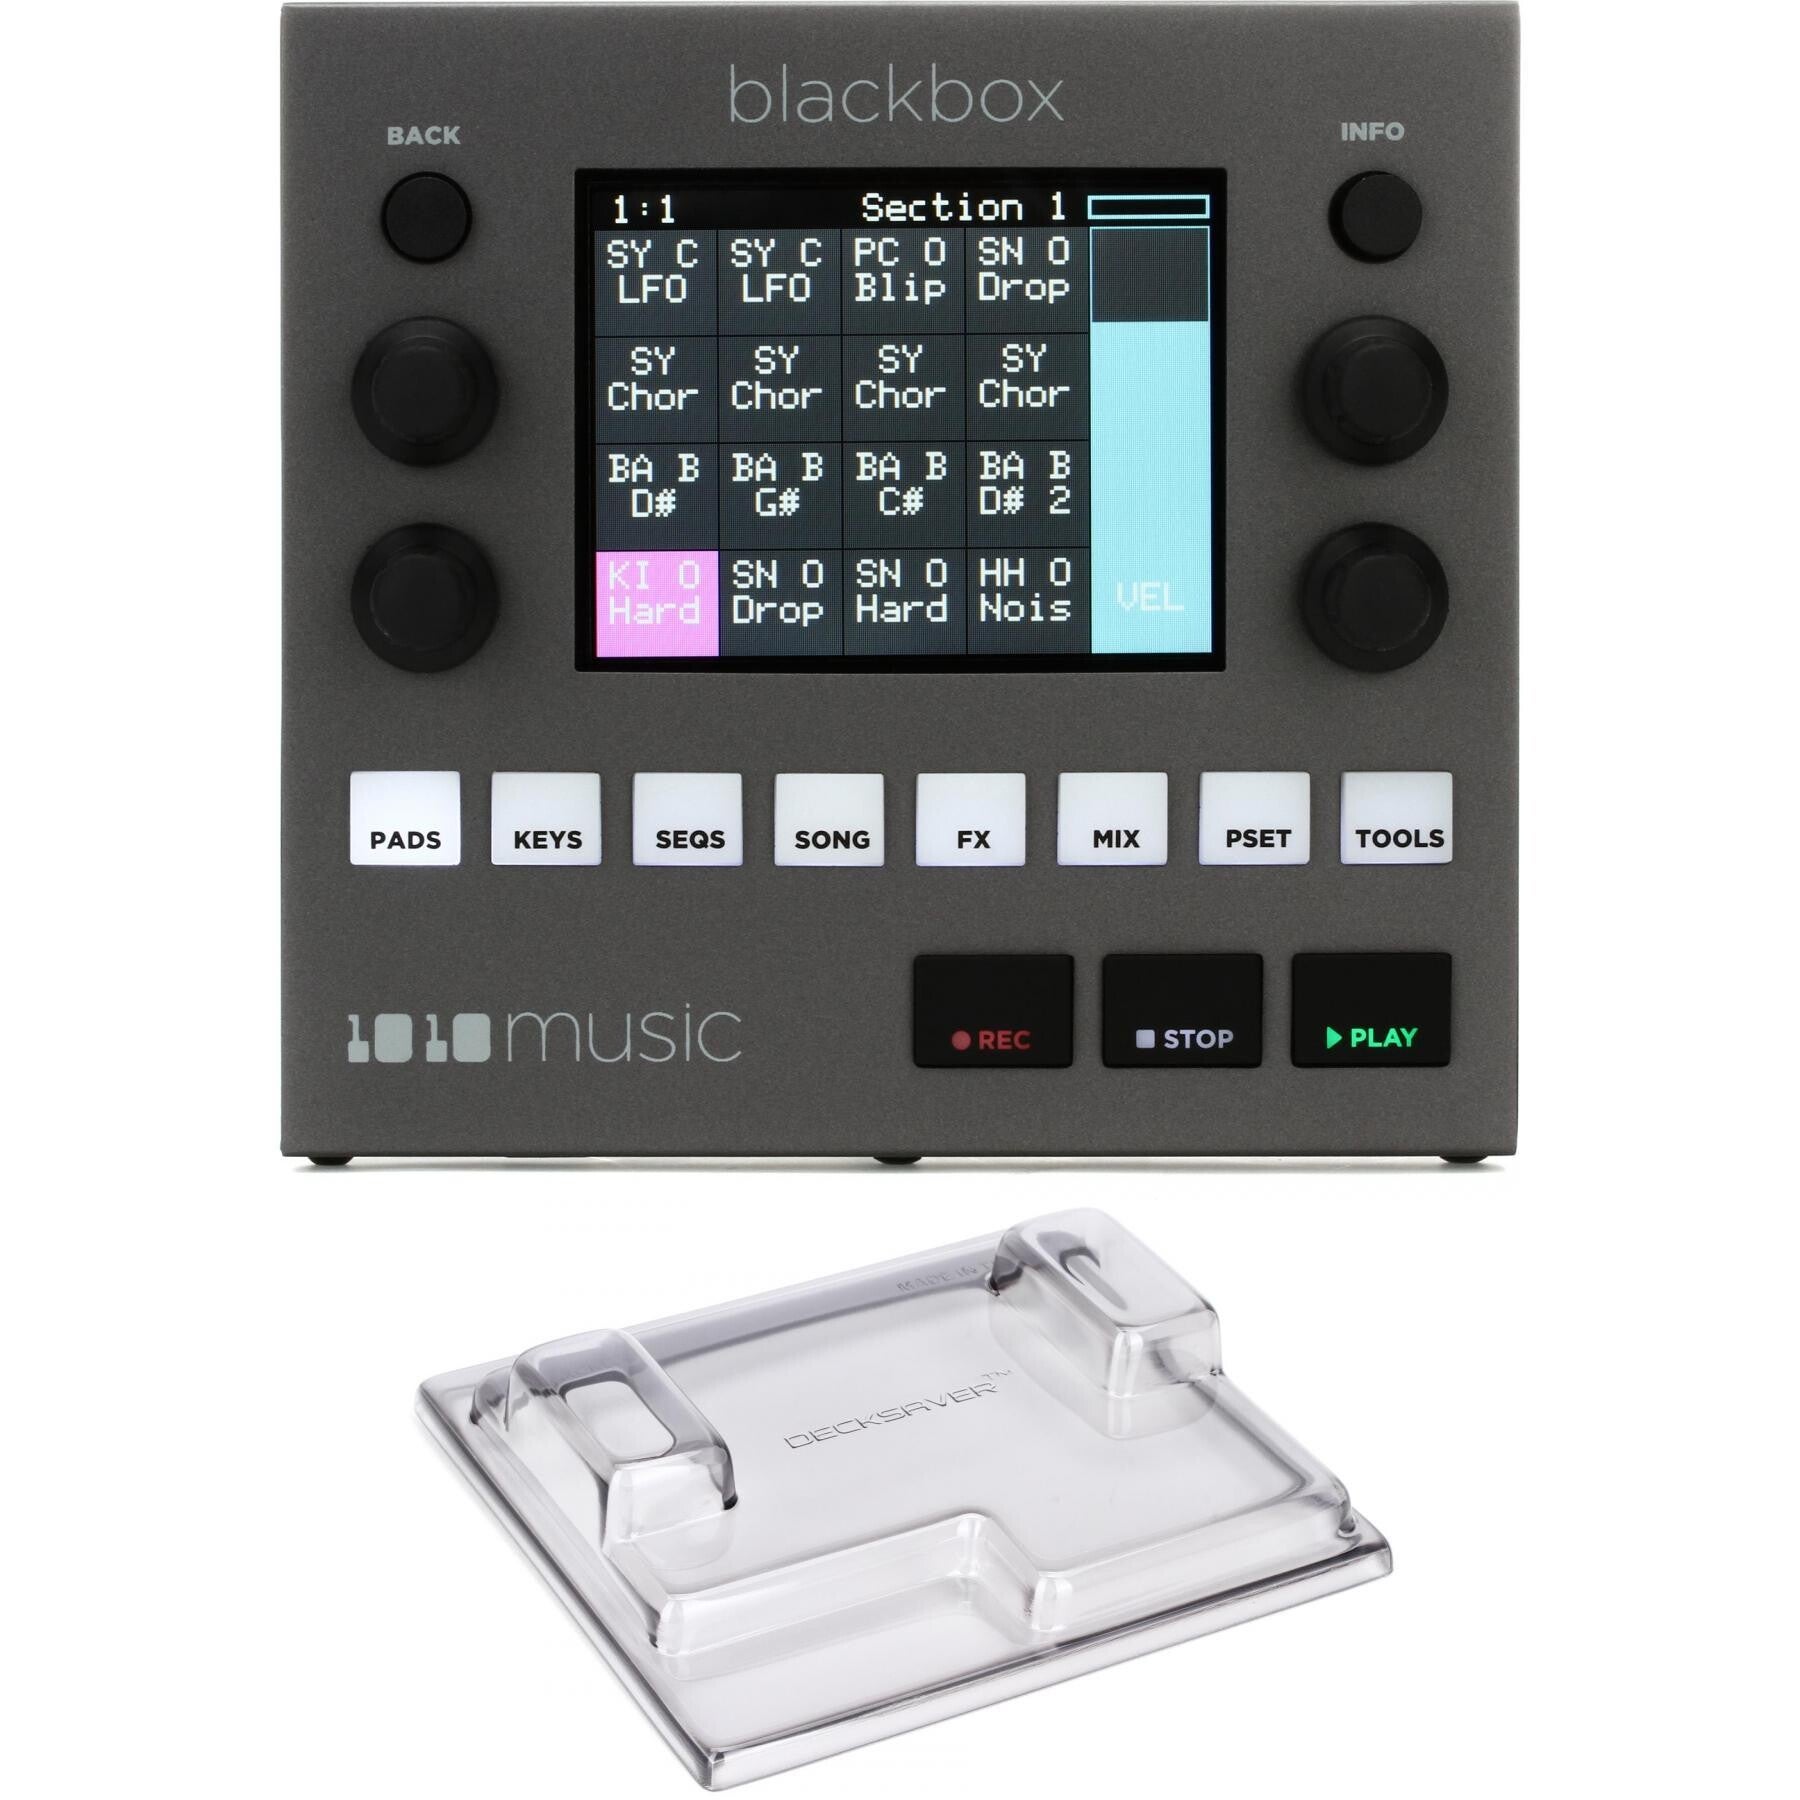 1010music Blackbox Studio - Compact Sampling Studio with Decksaver